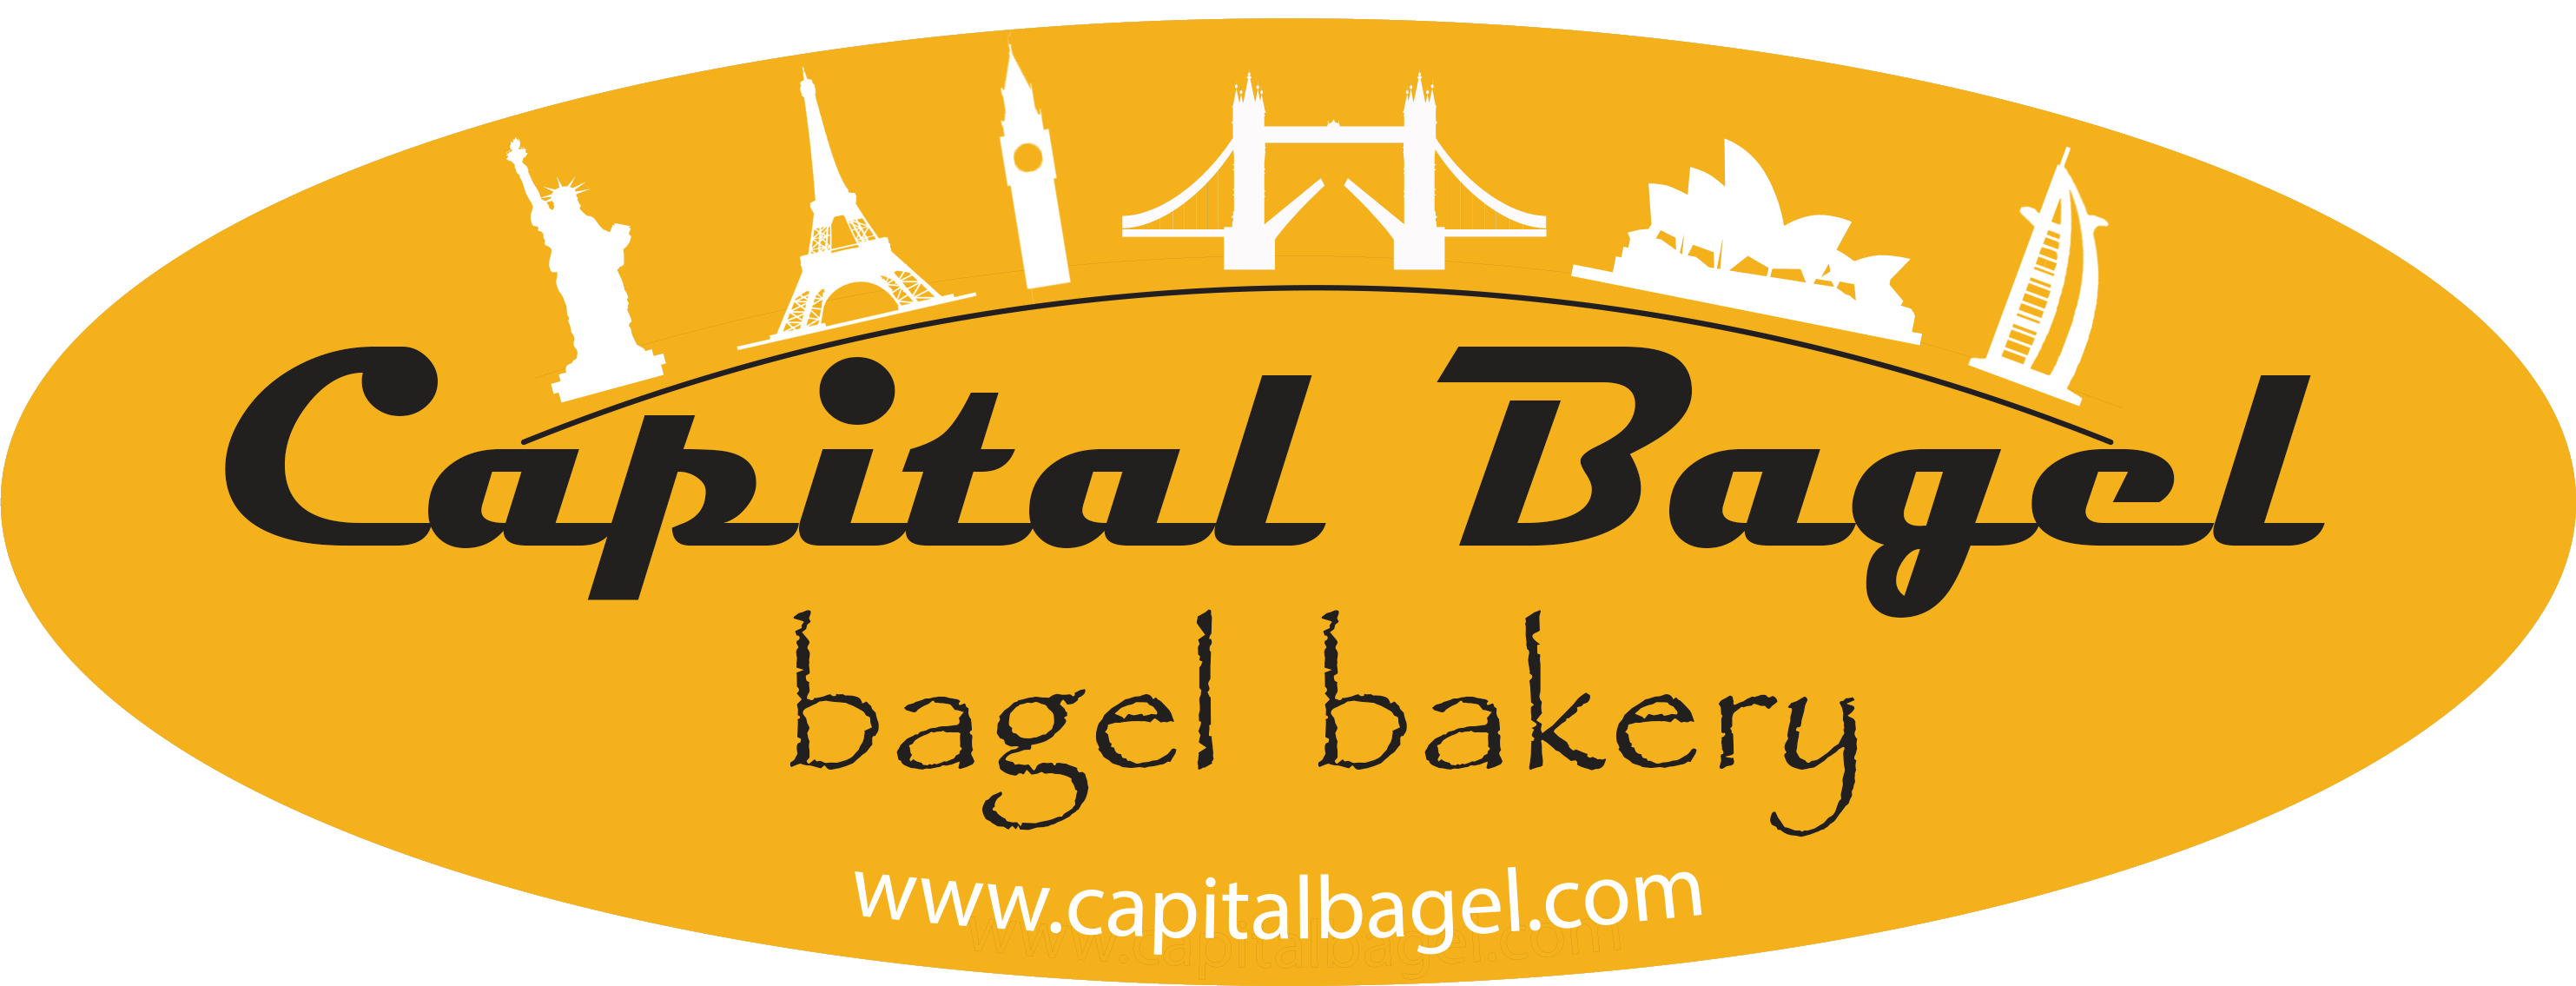 Capital Bagel